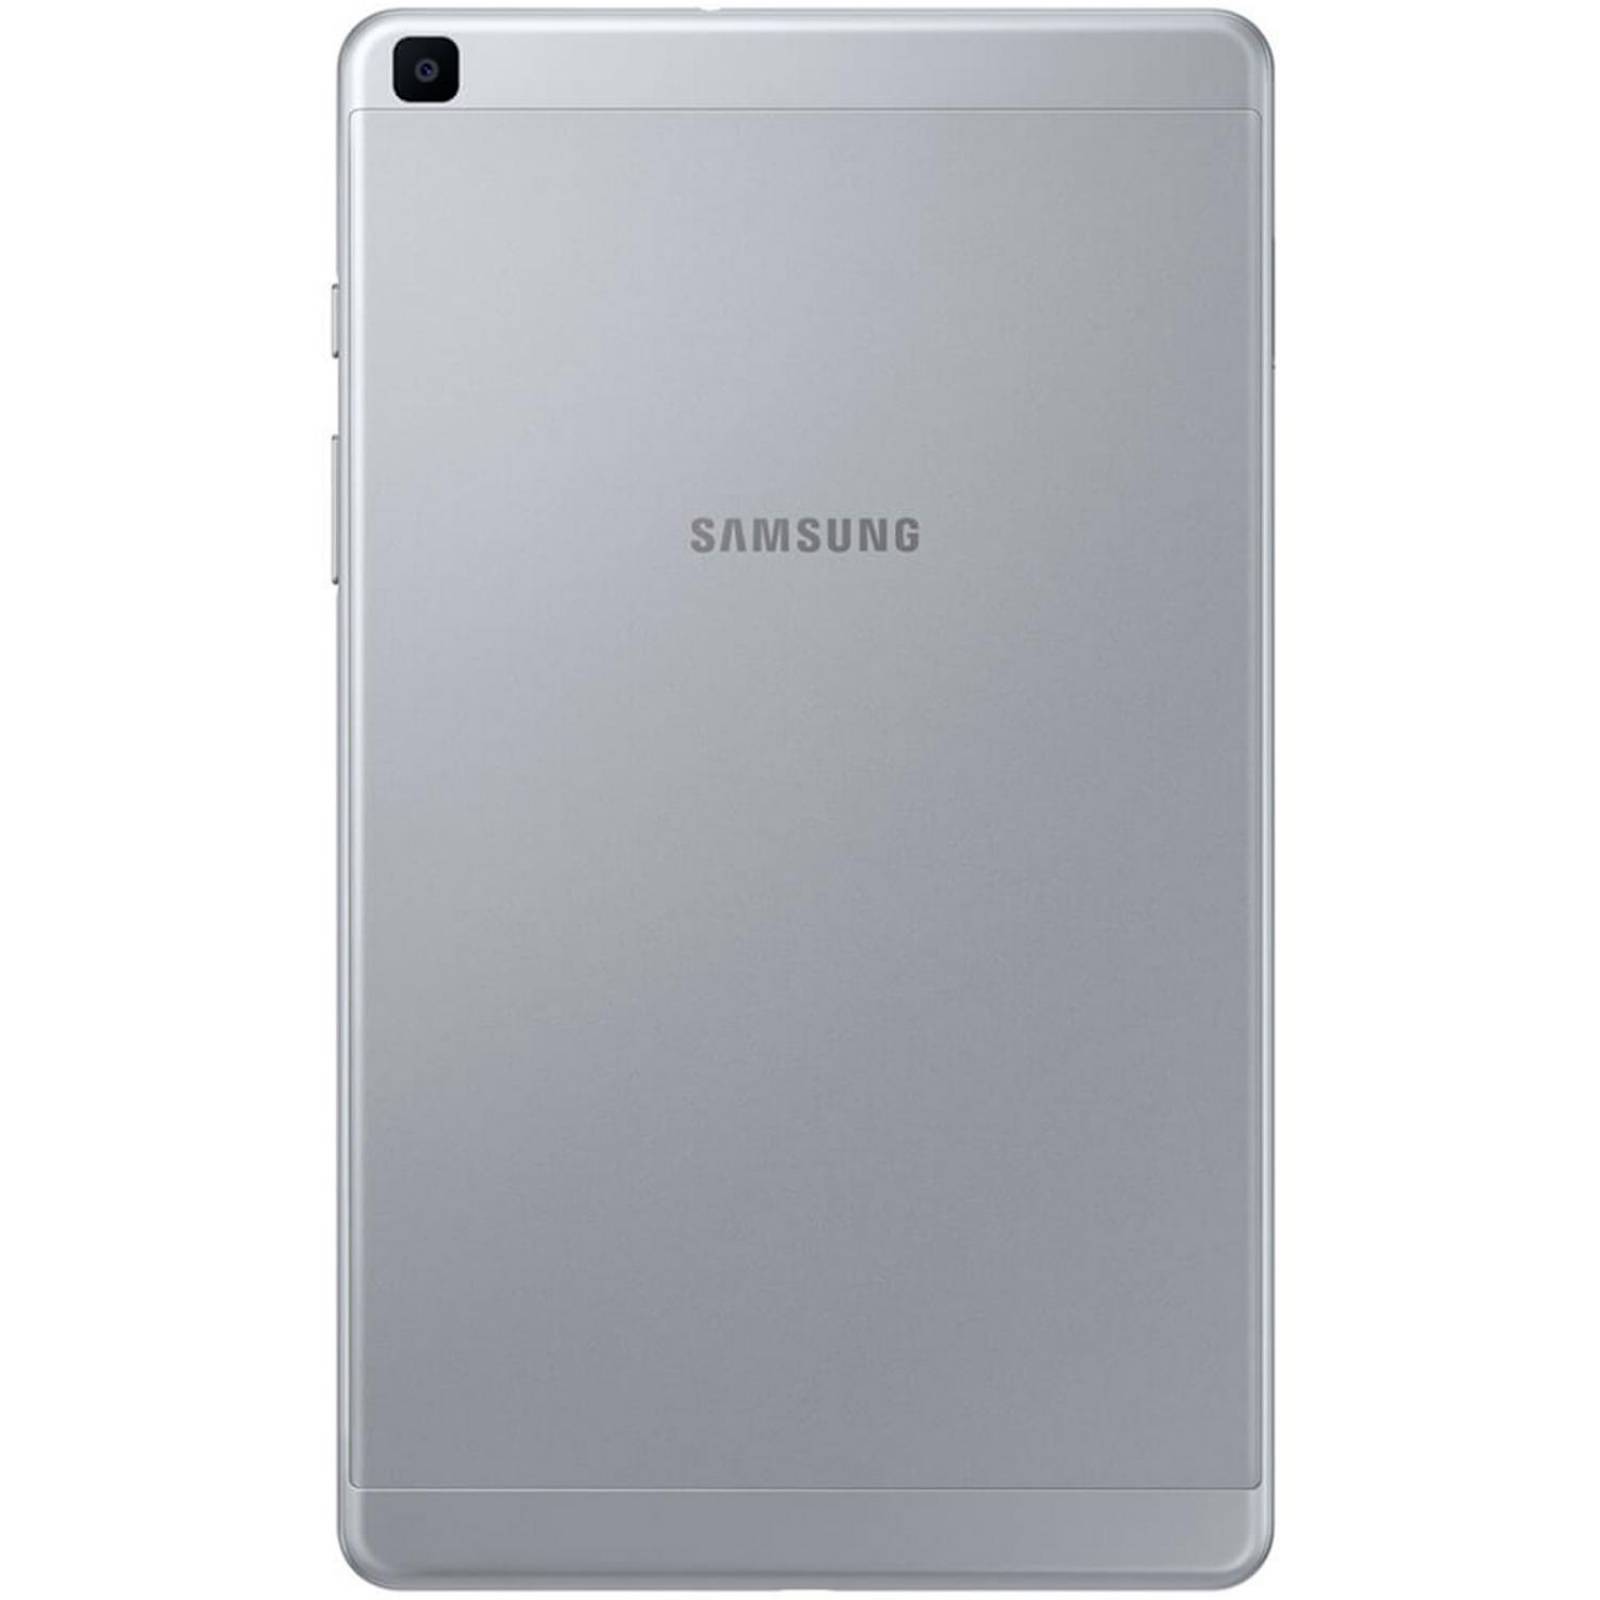 Tablet Galaxy TabA Samsung Sm-t290 2gb 32gb 8 Android 9.0 SM-T290NZSAM 